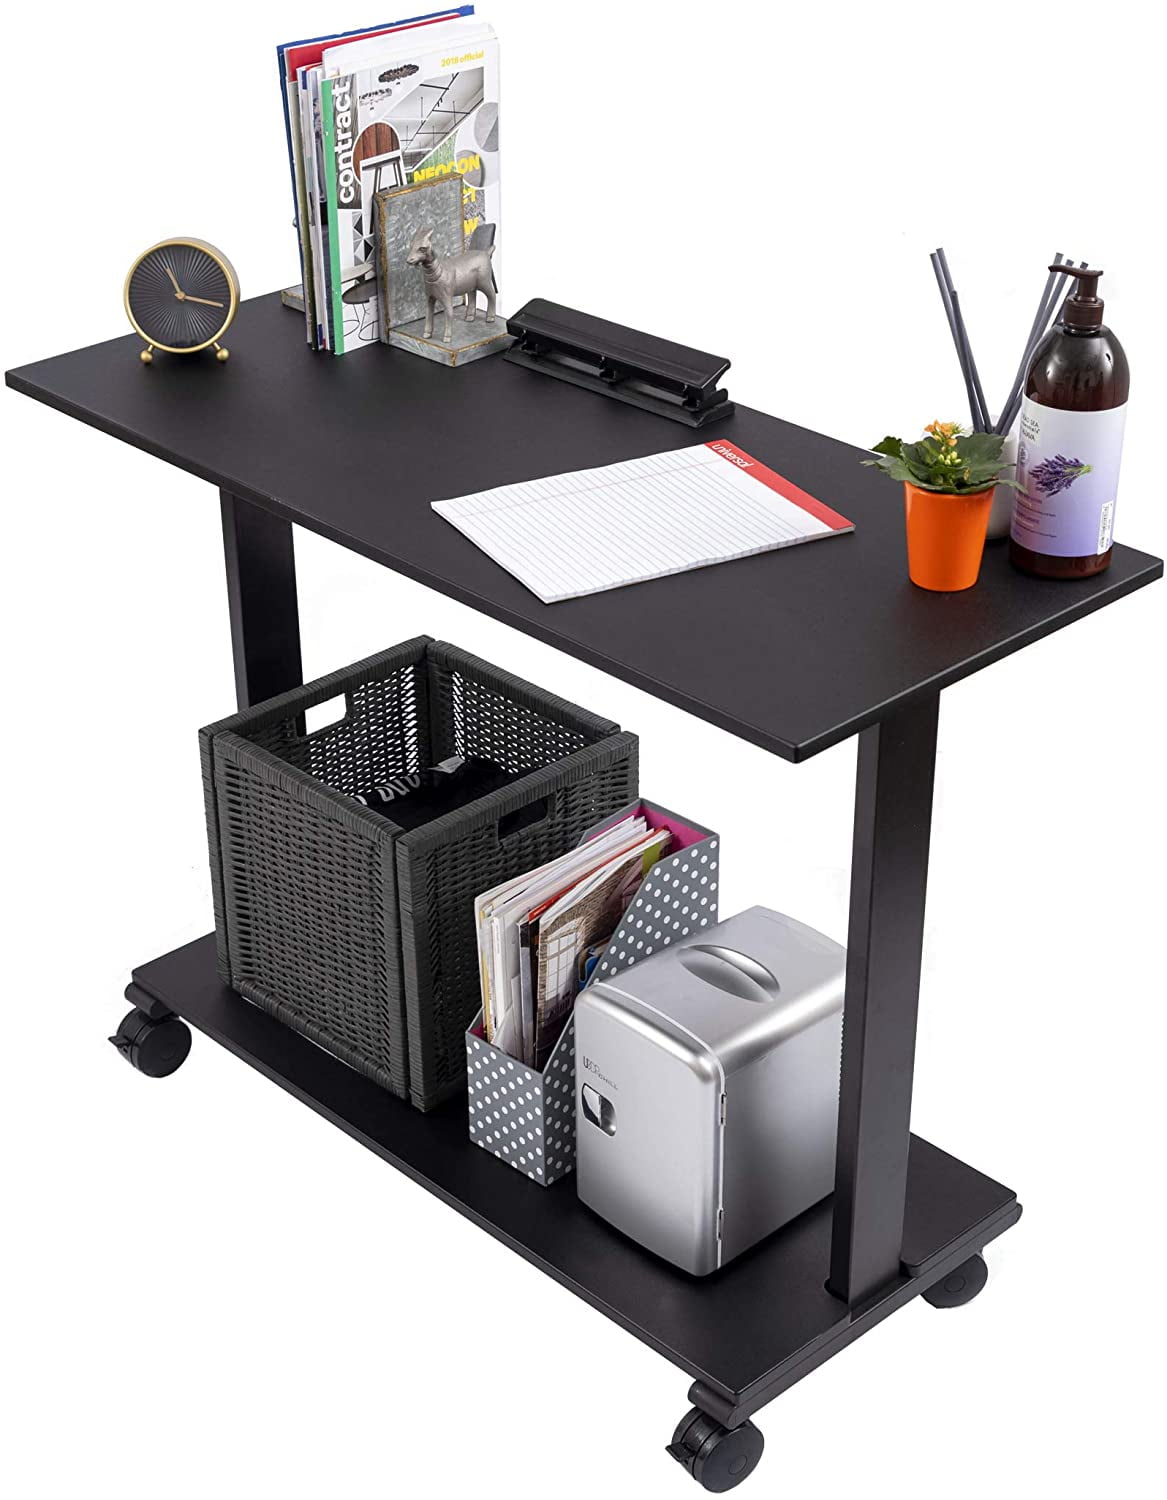 Two Level Rolling Printer Stand / Desk Shelf - Walmart.com ...